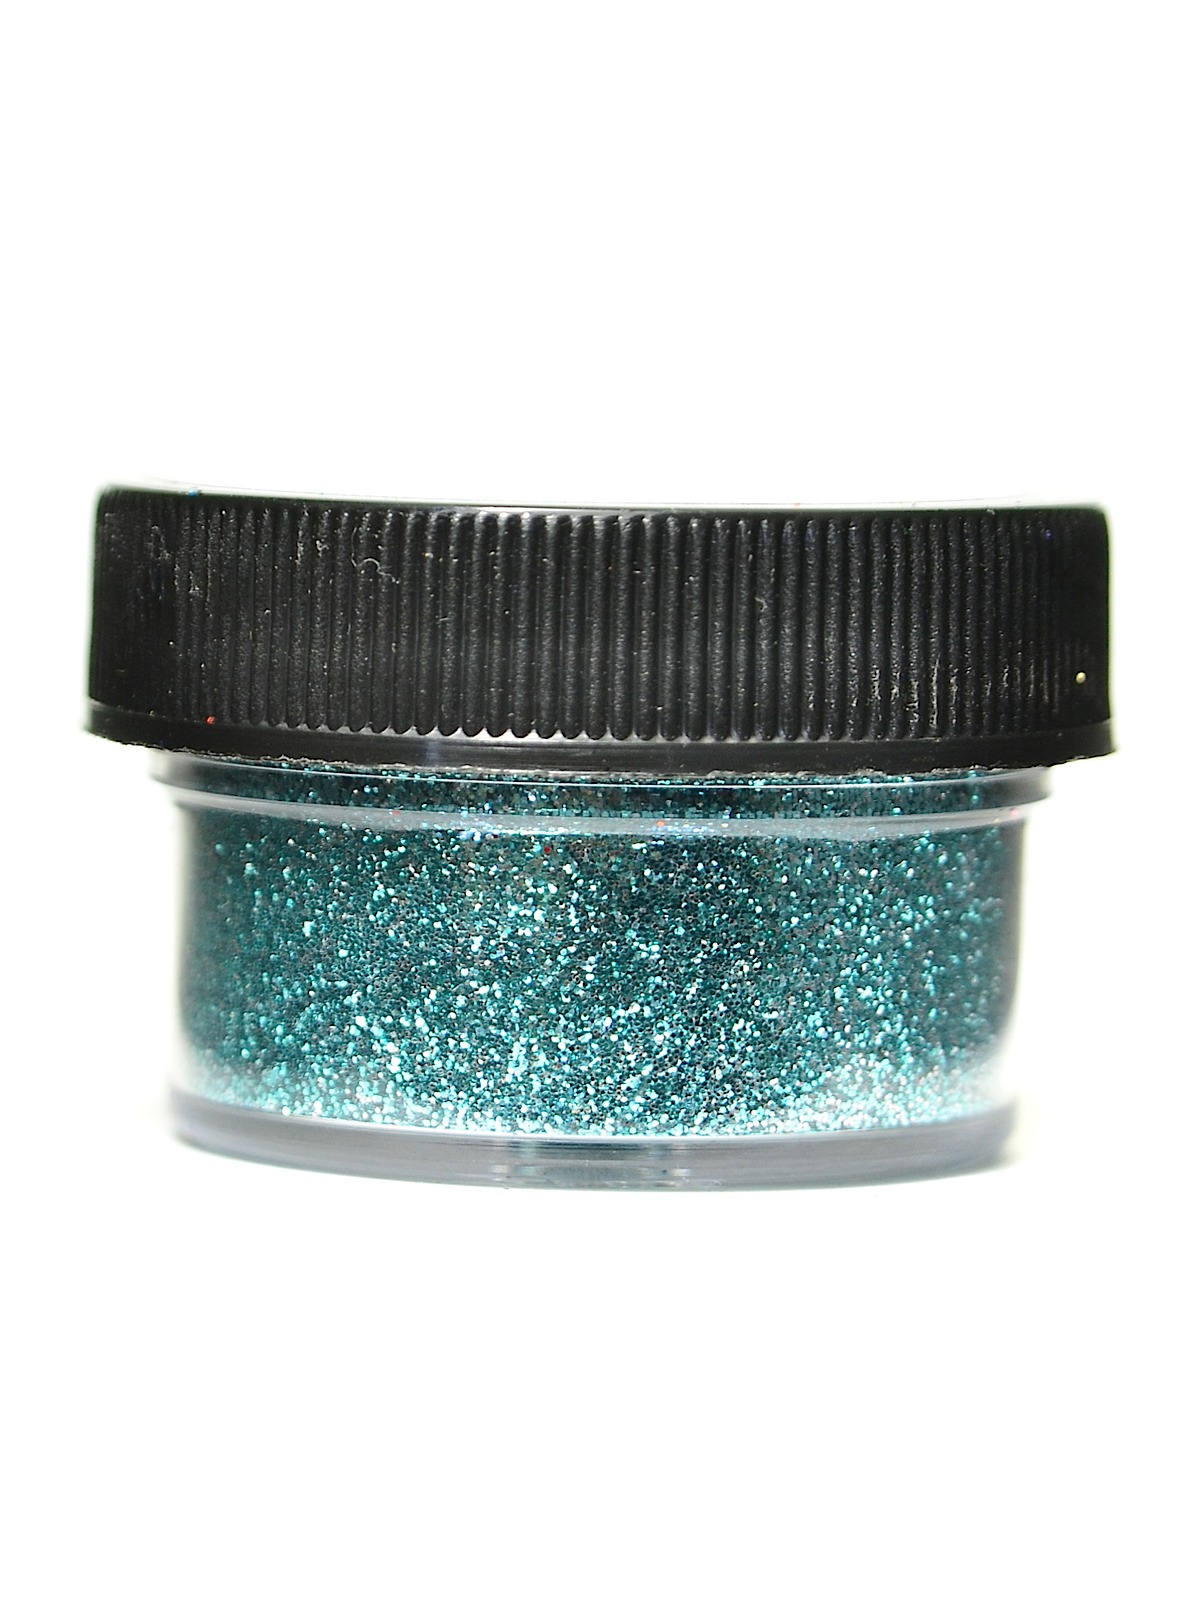 Ultrafine Opaque Glitter Ice 1 2 Oz. Jar